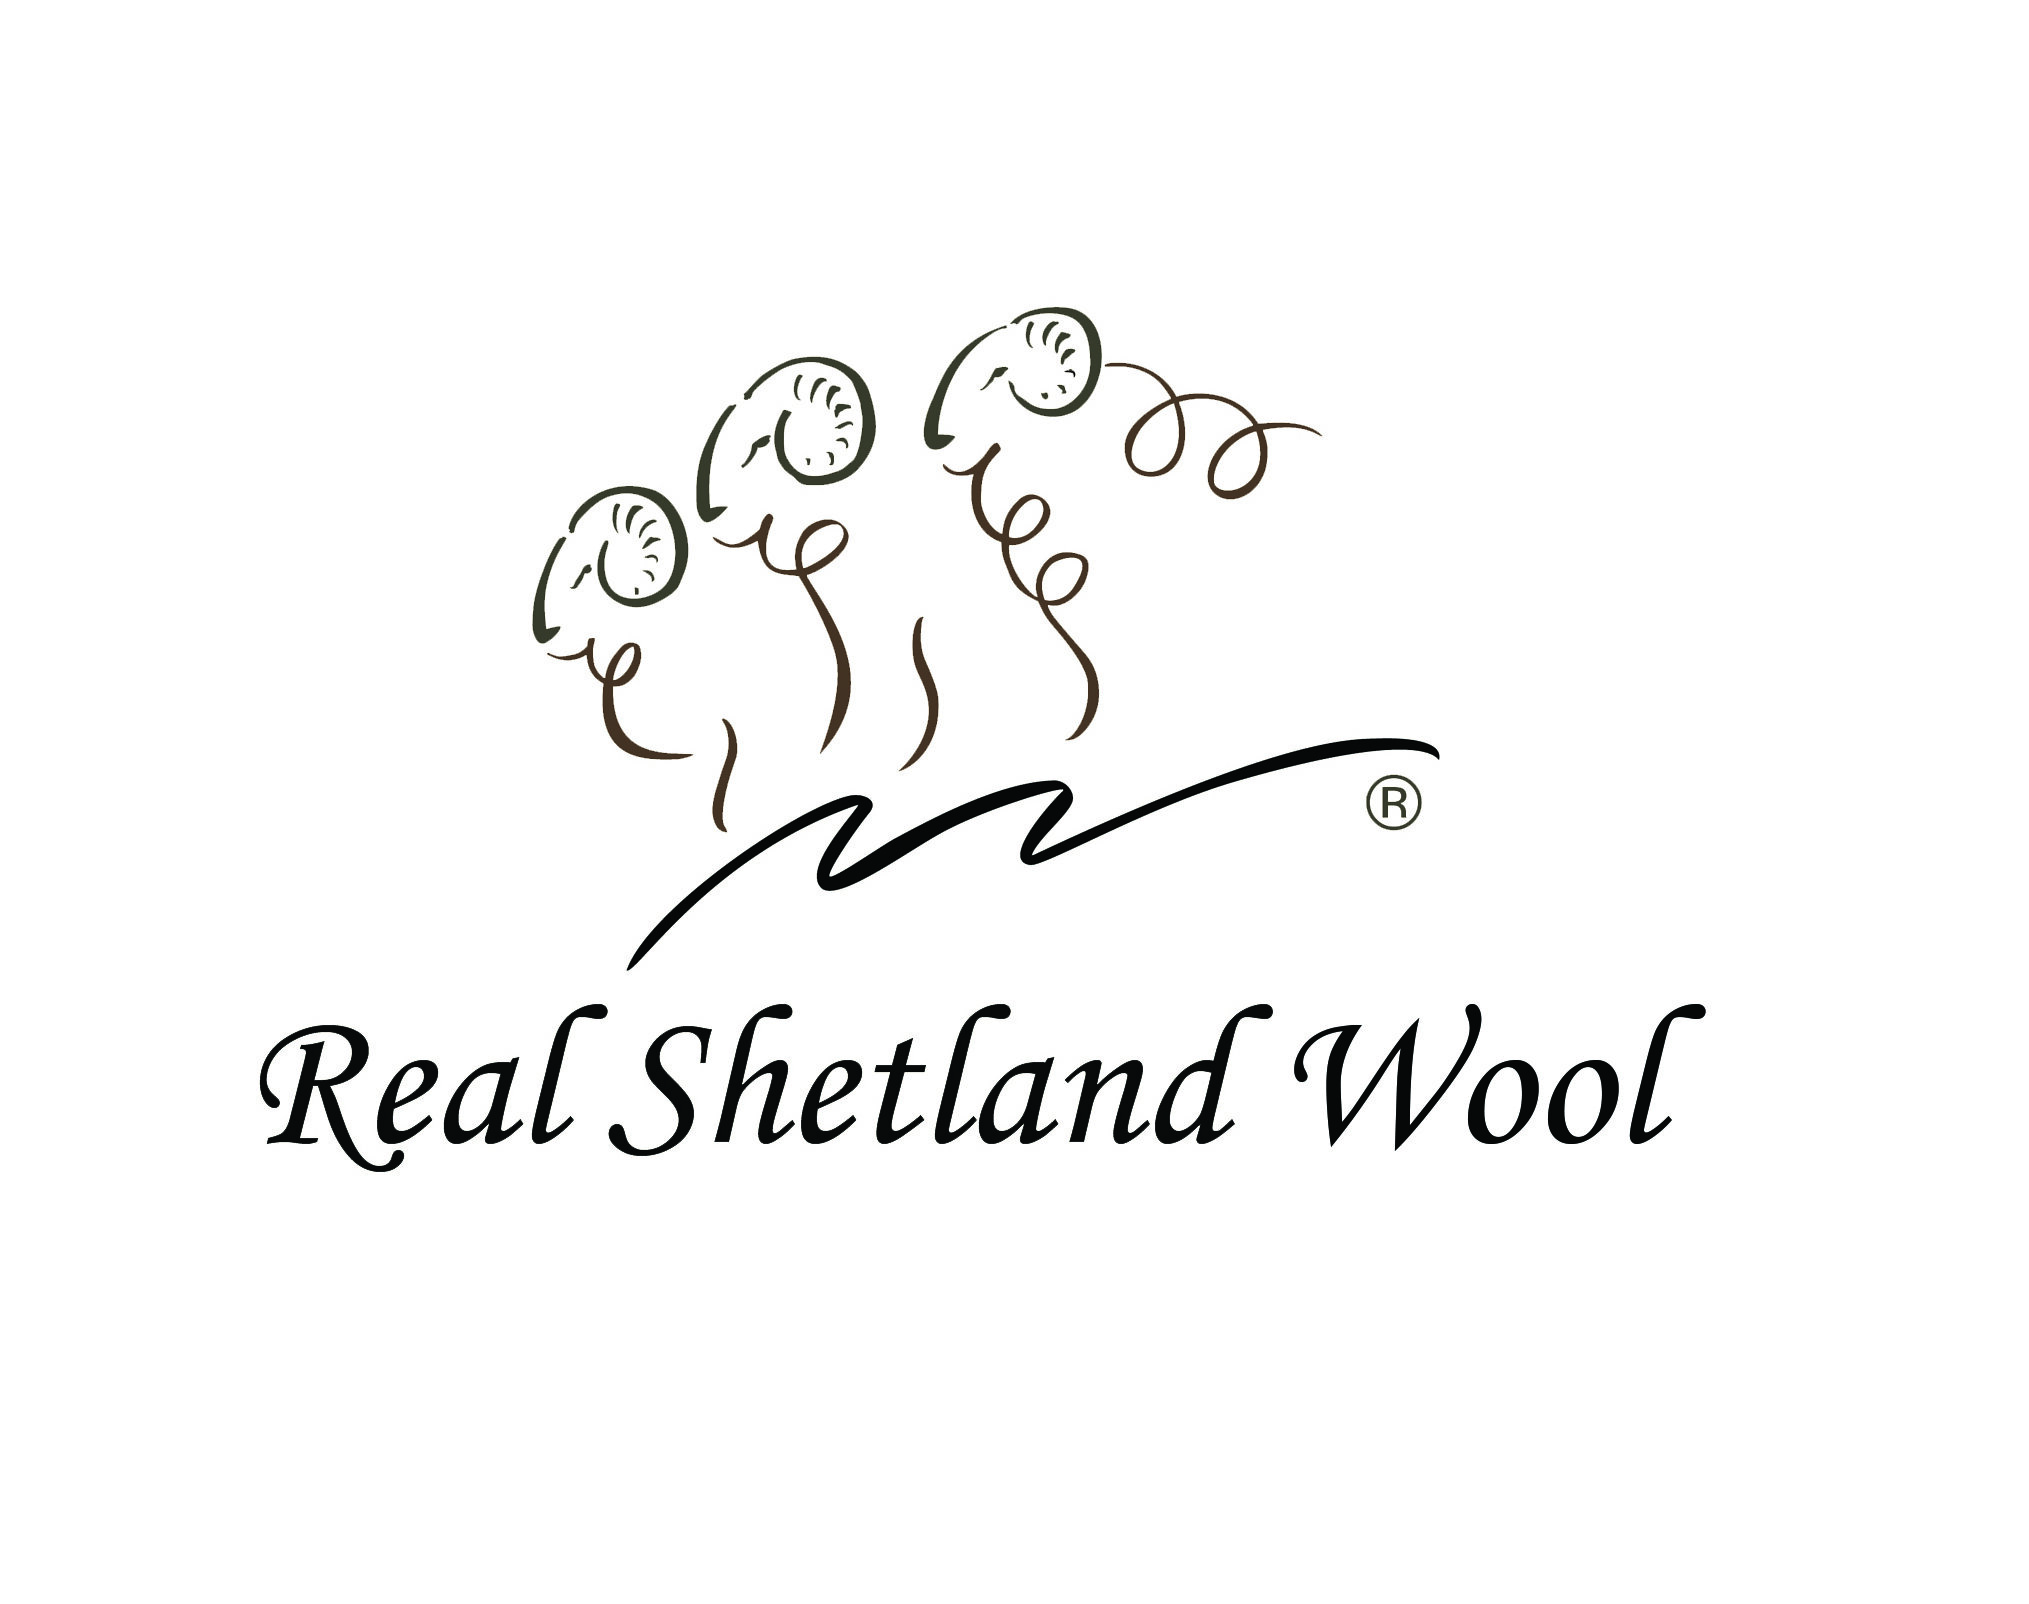 Real Shetland Wool 3 Sheep logo